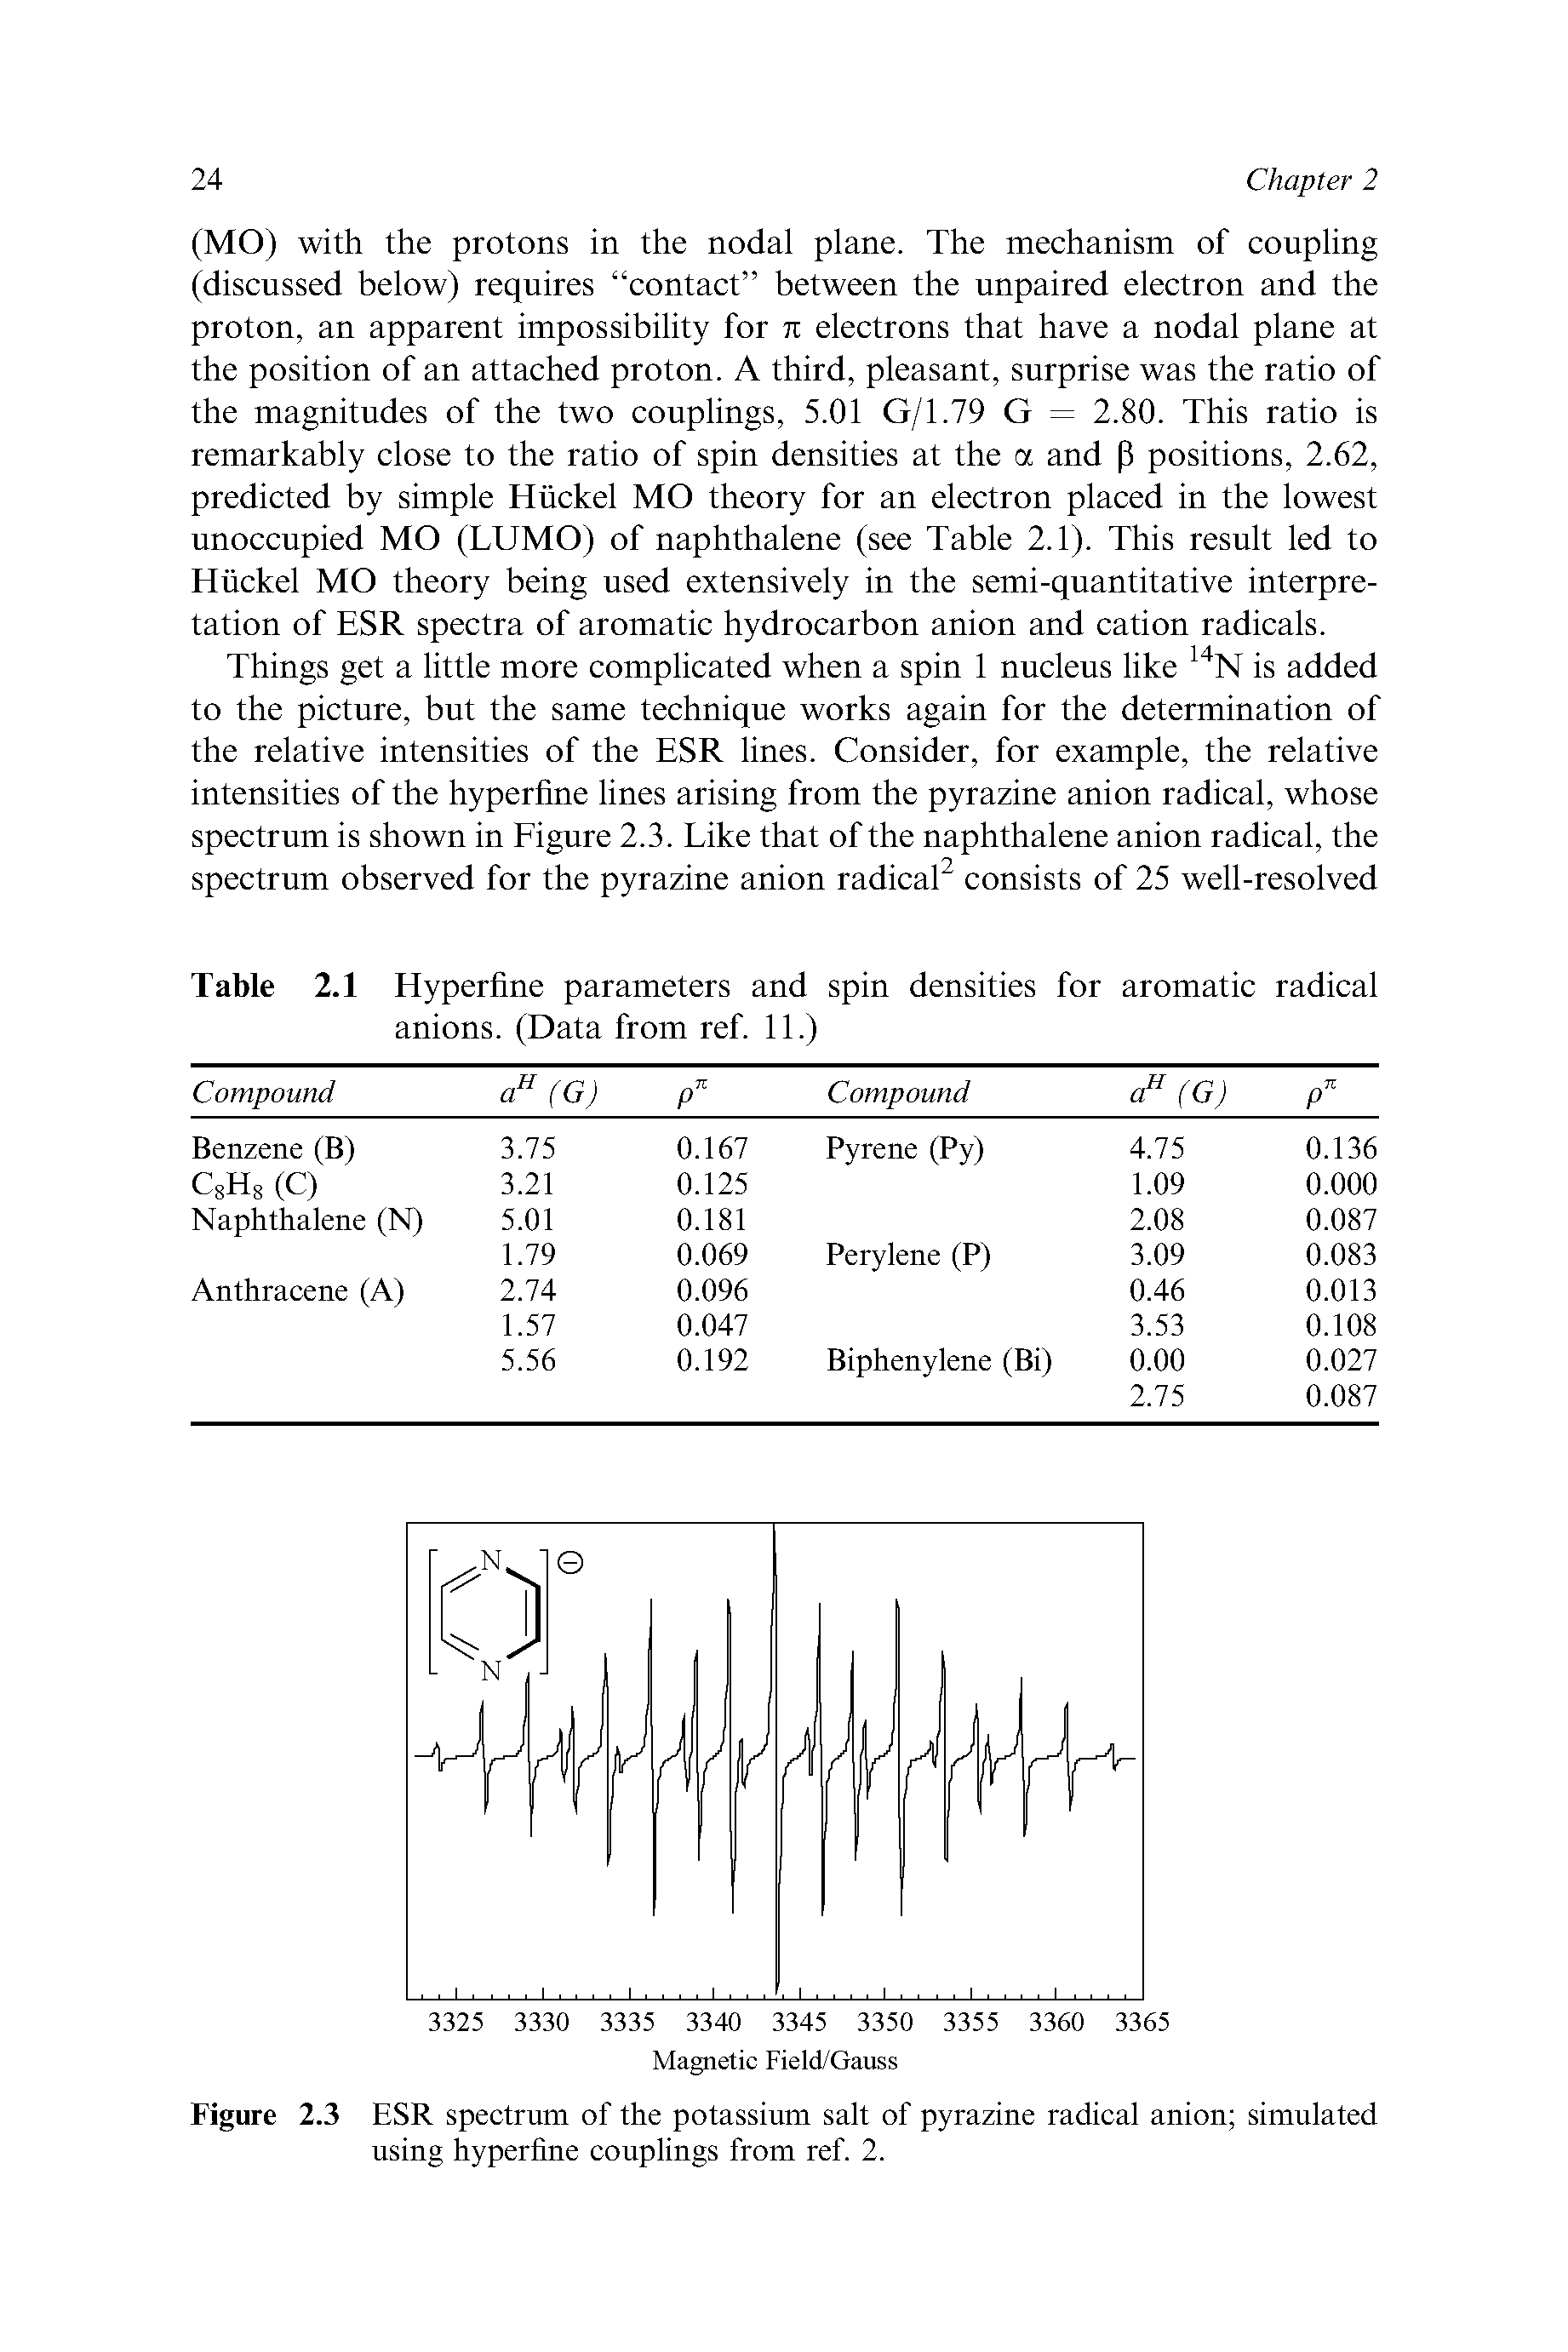 Figure 2.3 ESR spectrum of the potassium salt of pyrazine radical anion simulated using hyperfine couplings from ref. 2.